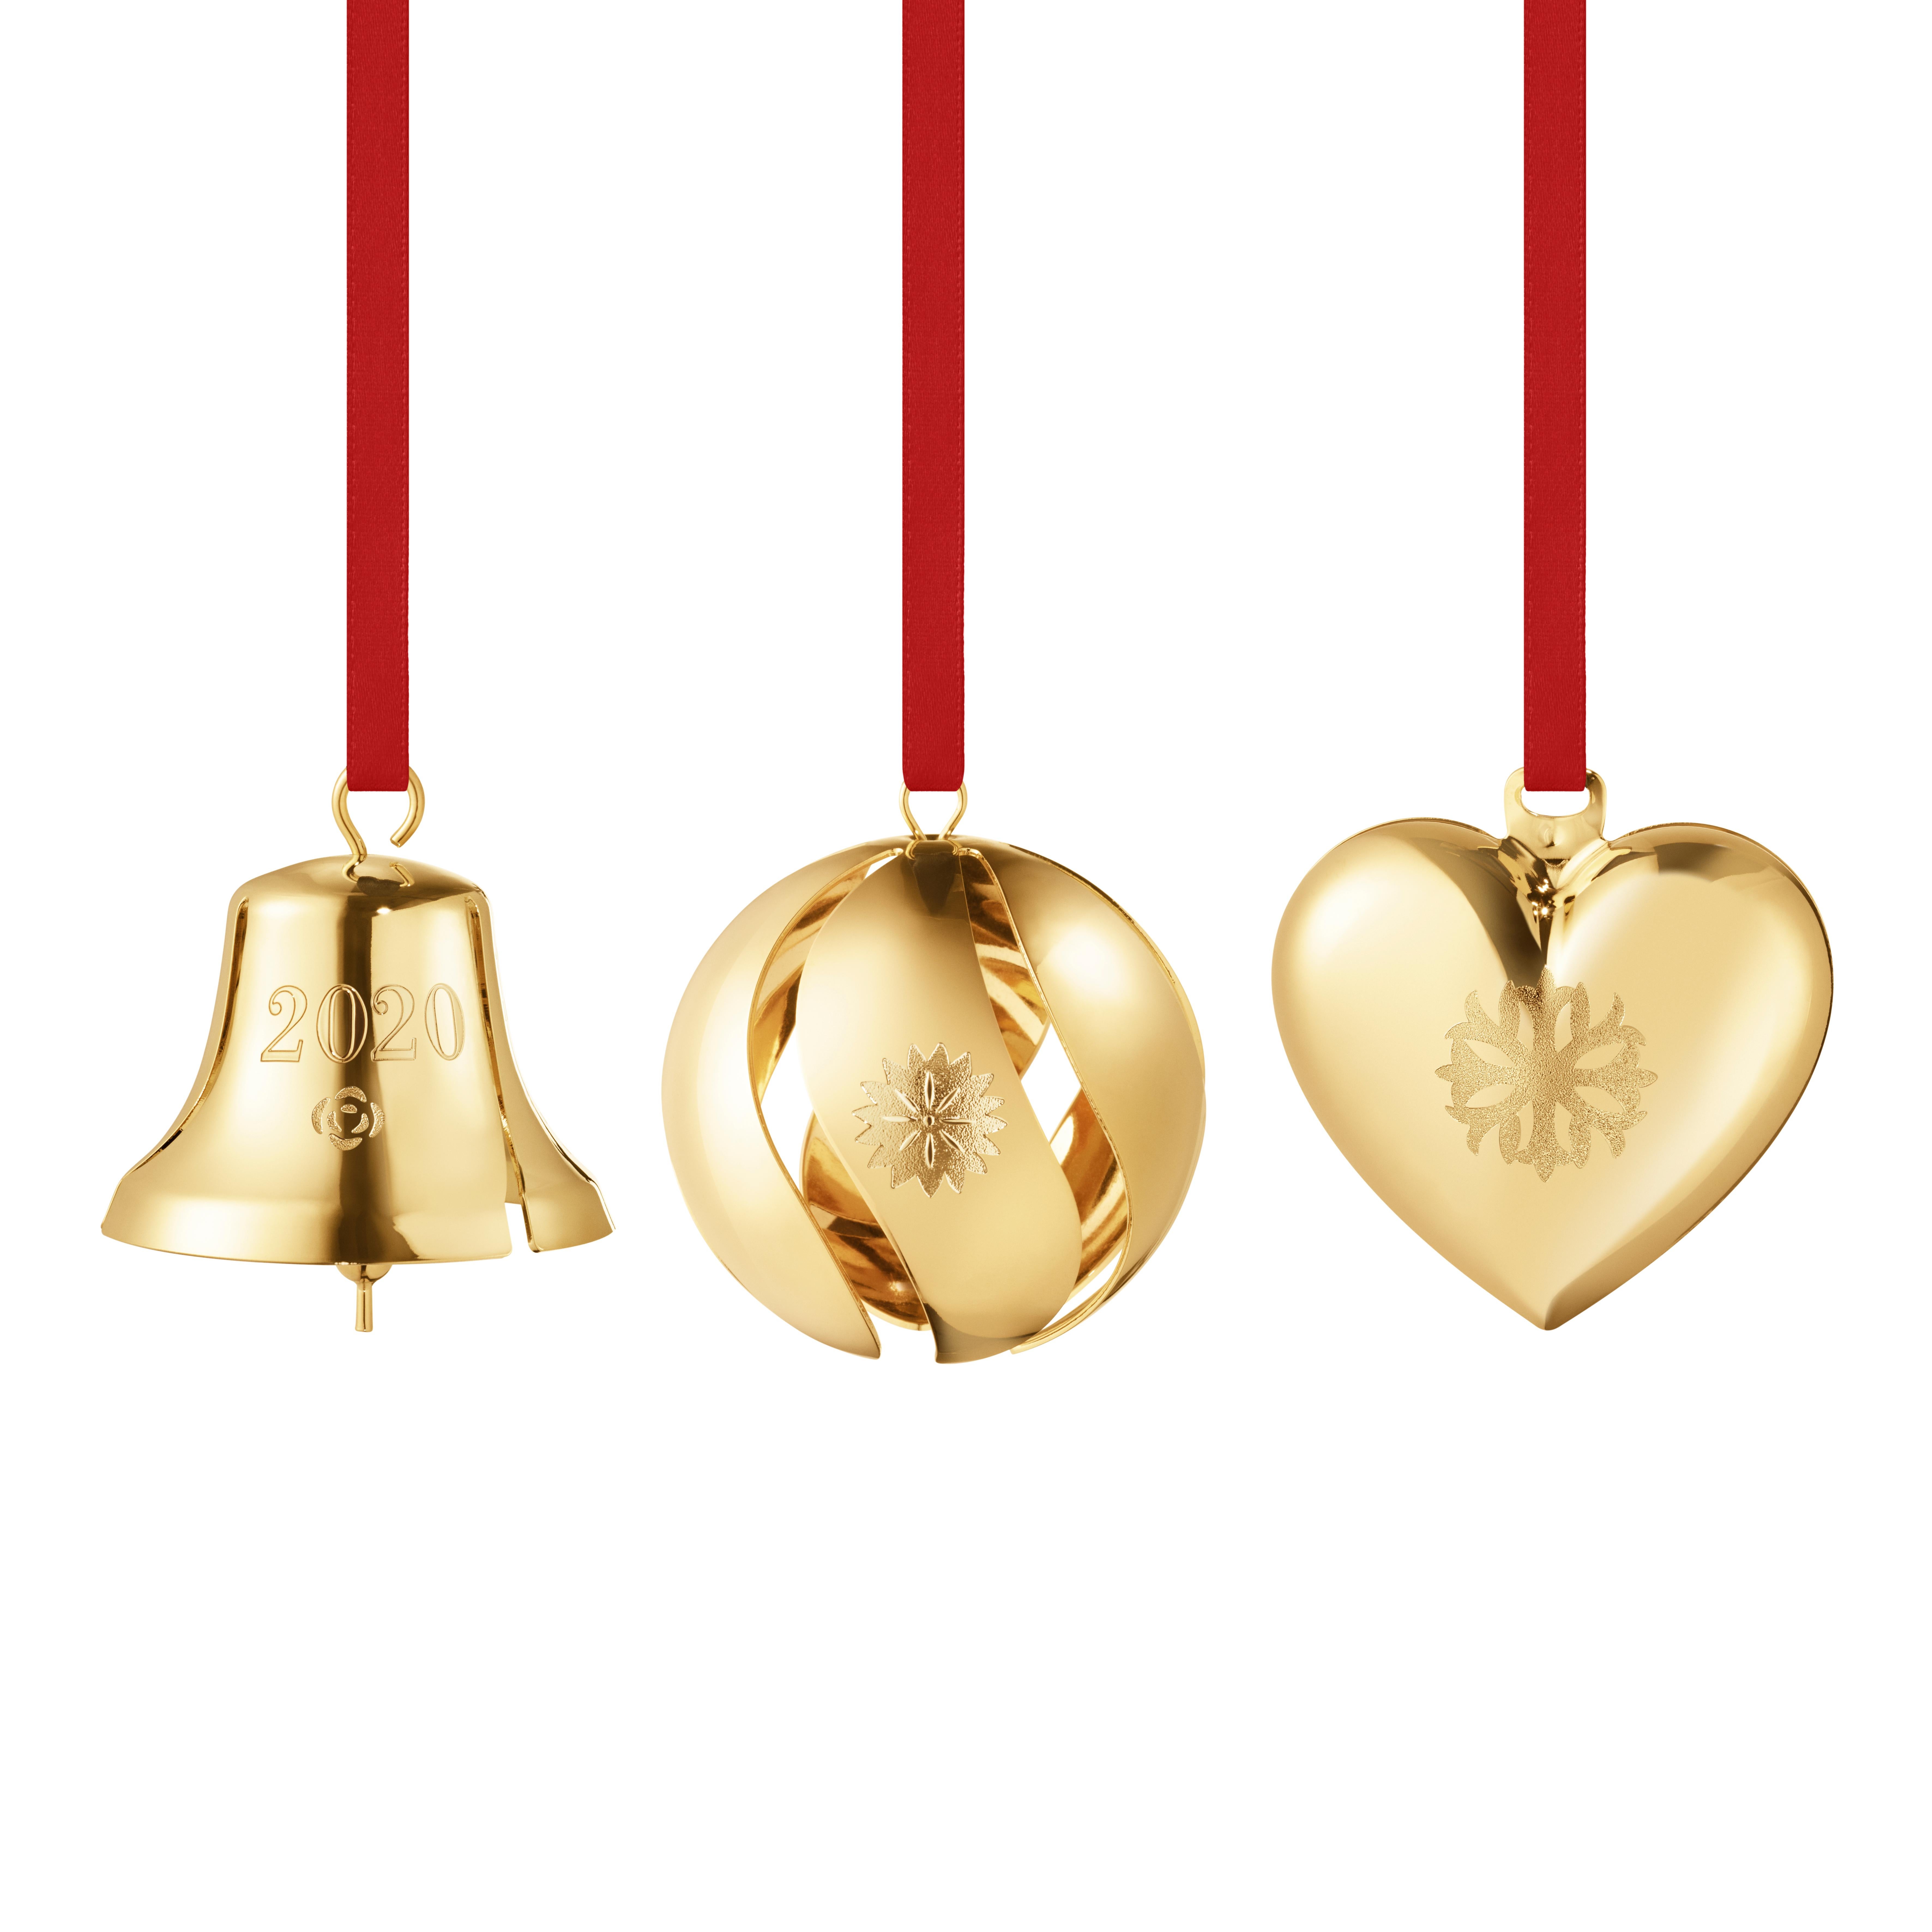 2020 Collectibles Gift Set, 3 pc, bell, ball, heart, 18 kt gold plated brass